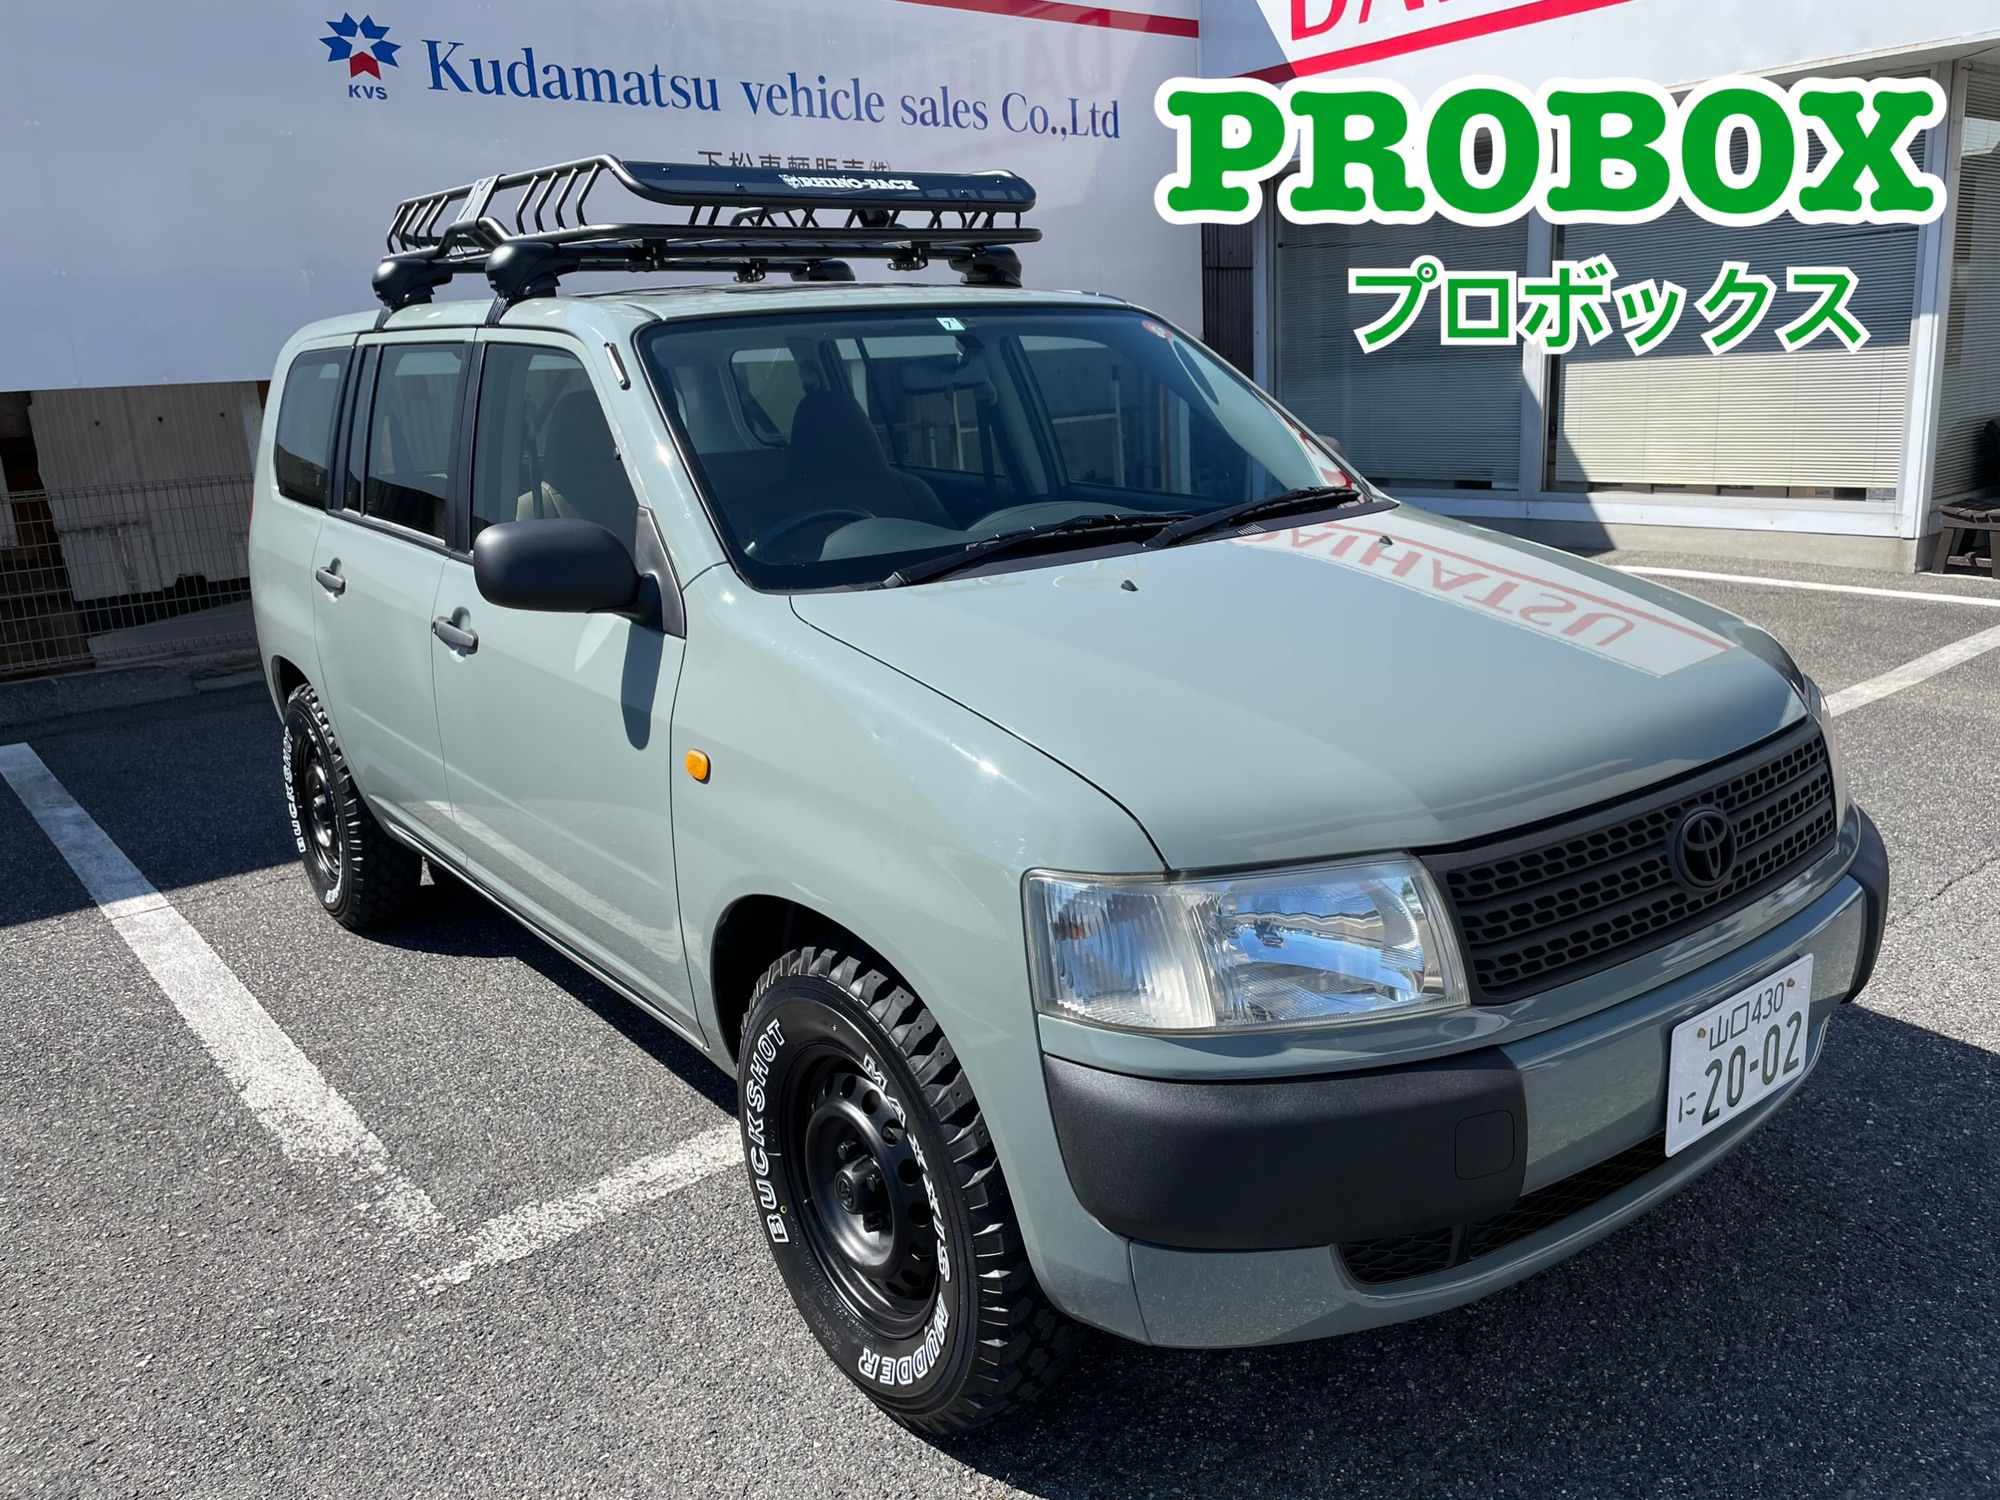 PROBOX CUSTOM パッケージ | Kudamatsu vehicle sales Co.,Ltd